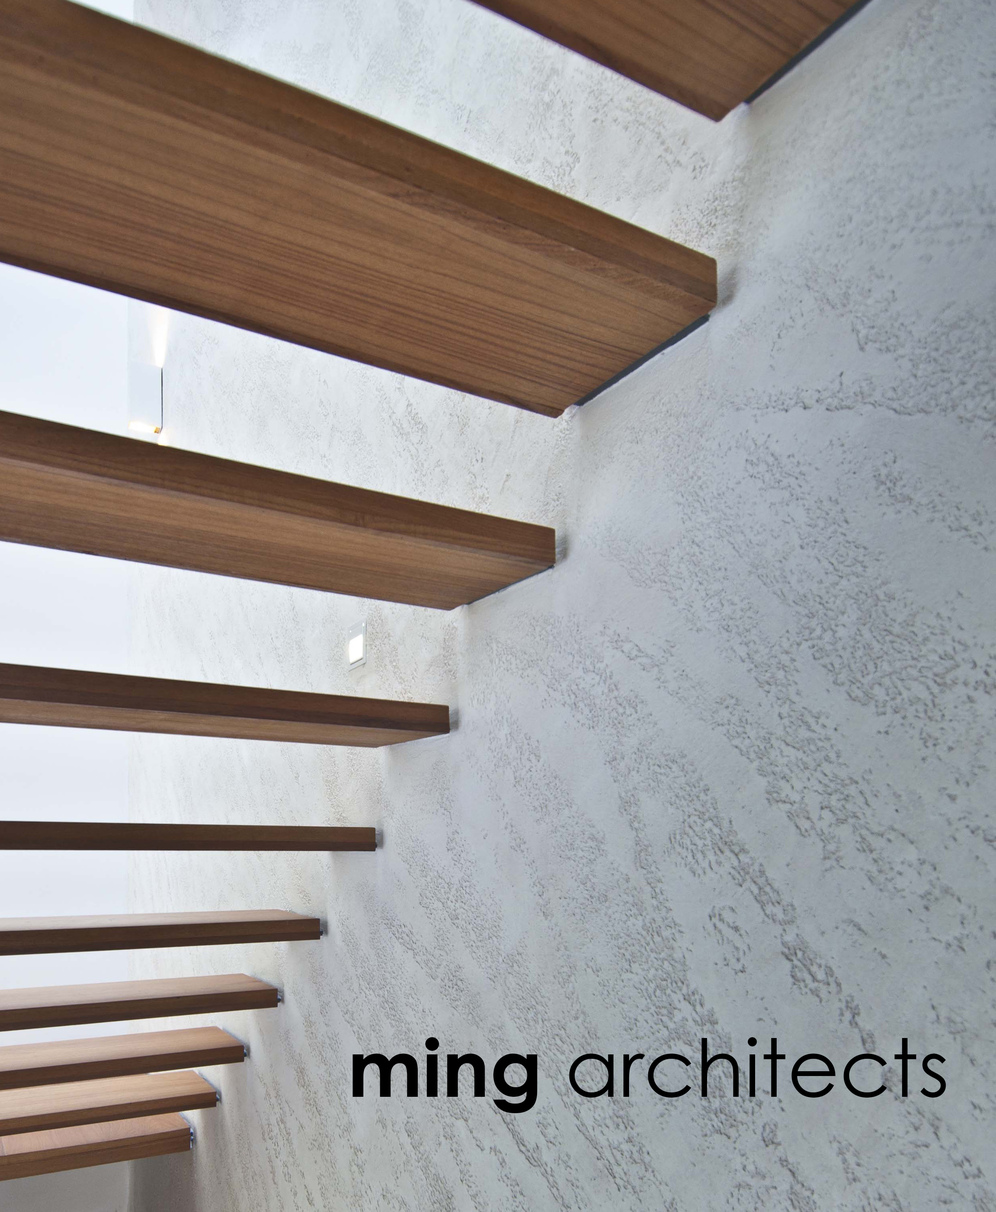 ming architects